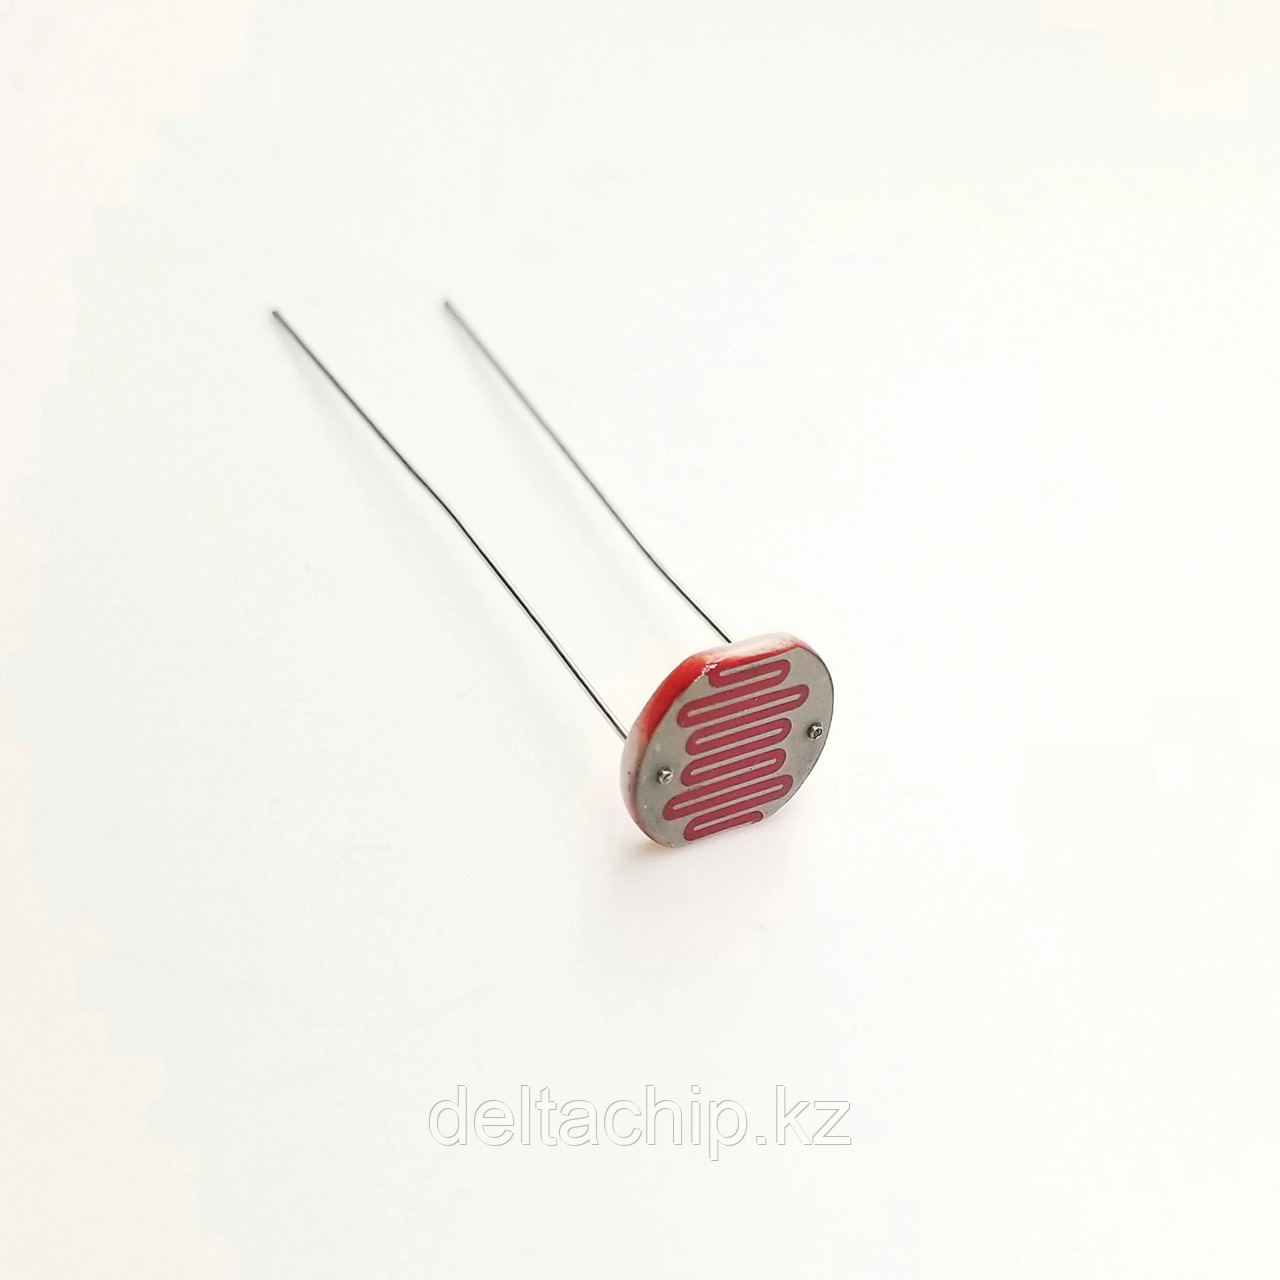 PHR-5 10mm  GL10539   Фоторезистор